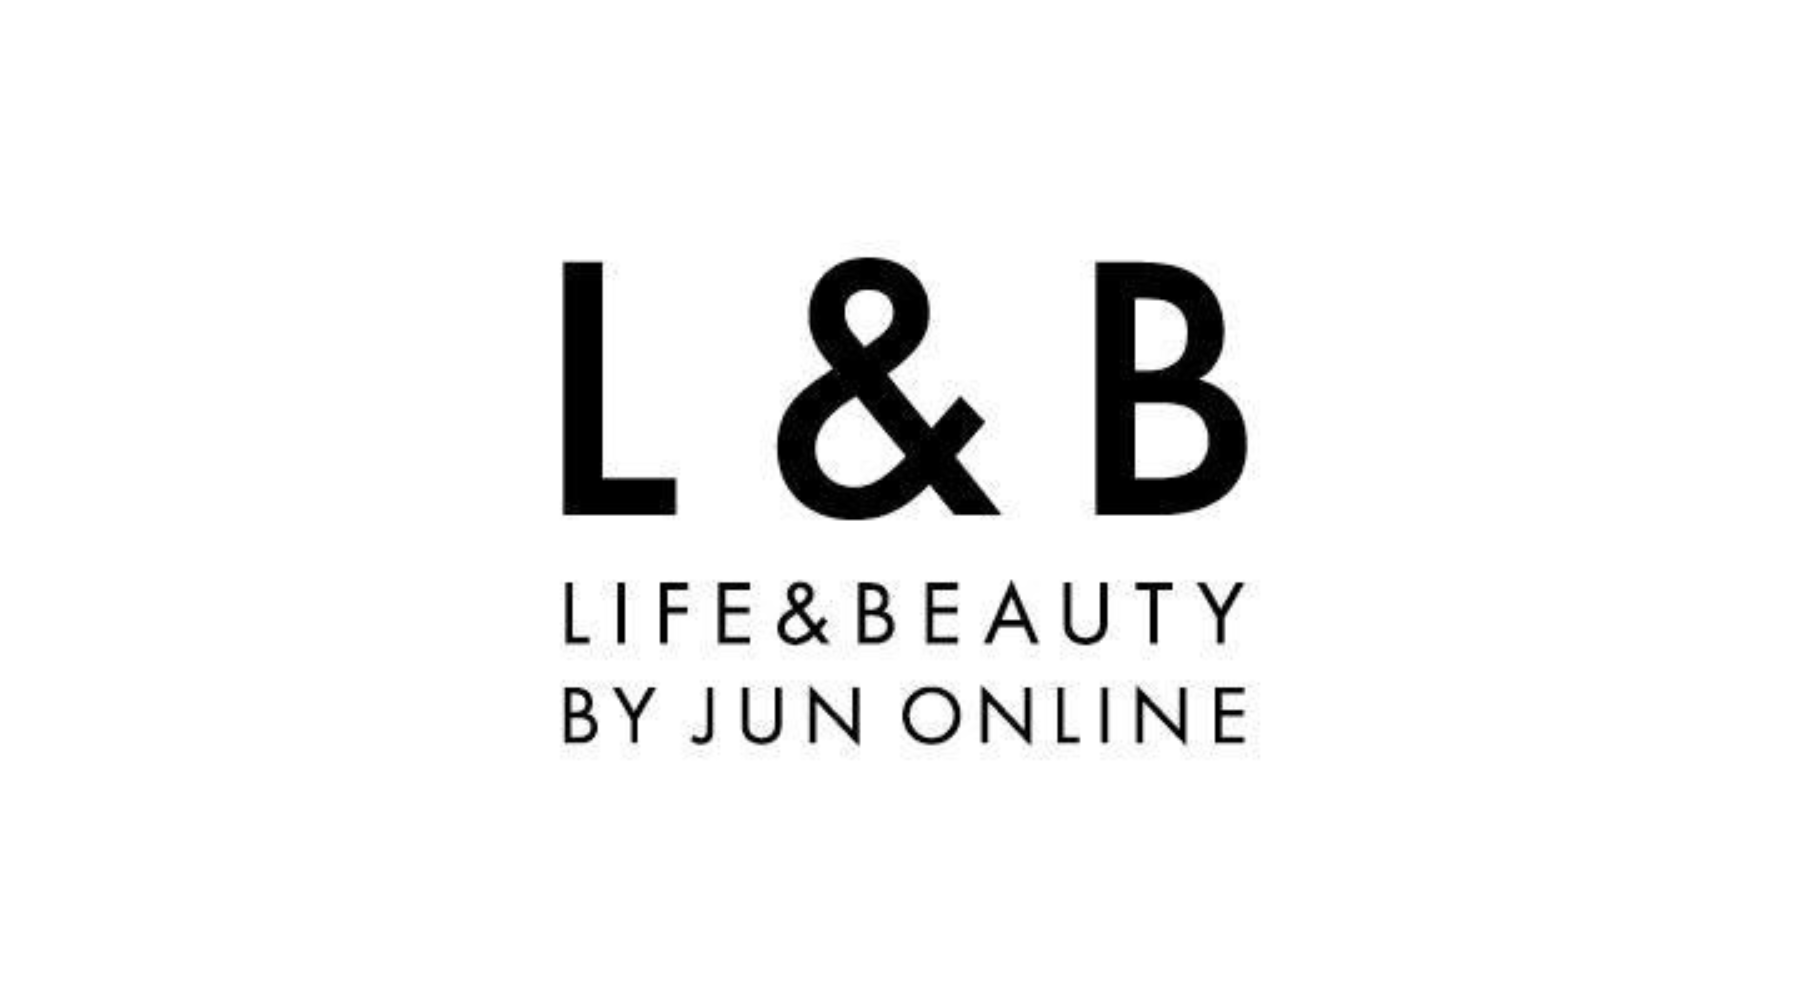 Life&Beauty by JUN ONLINE